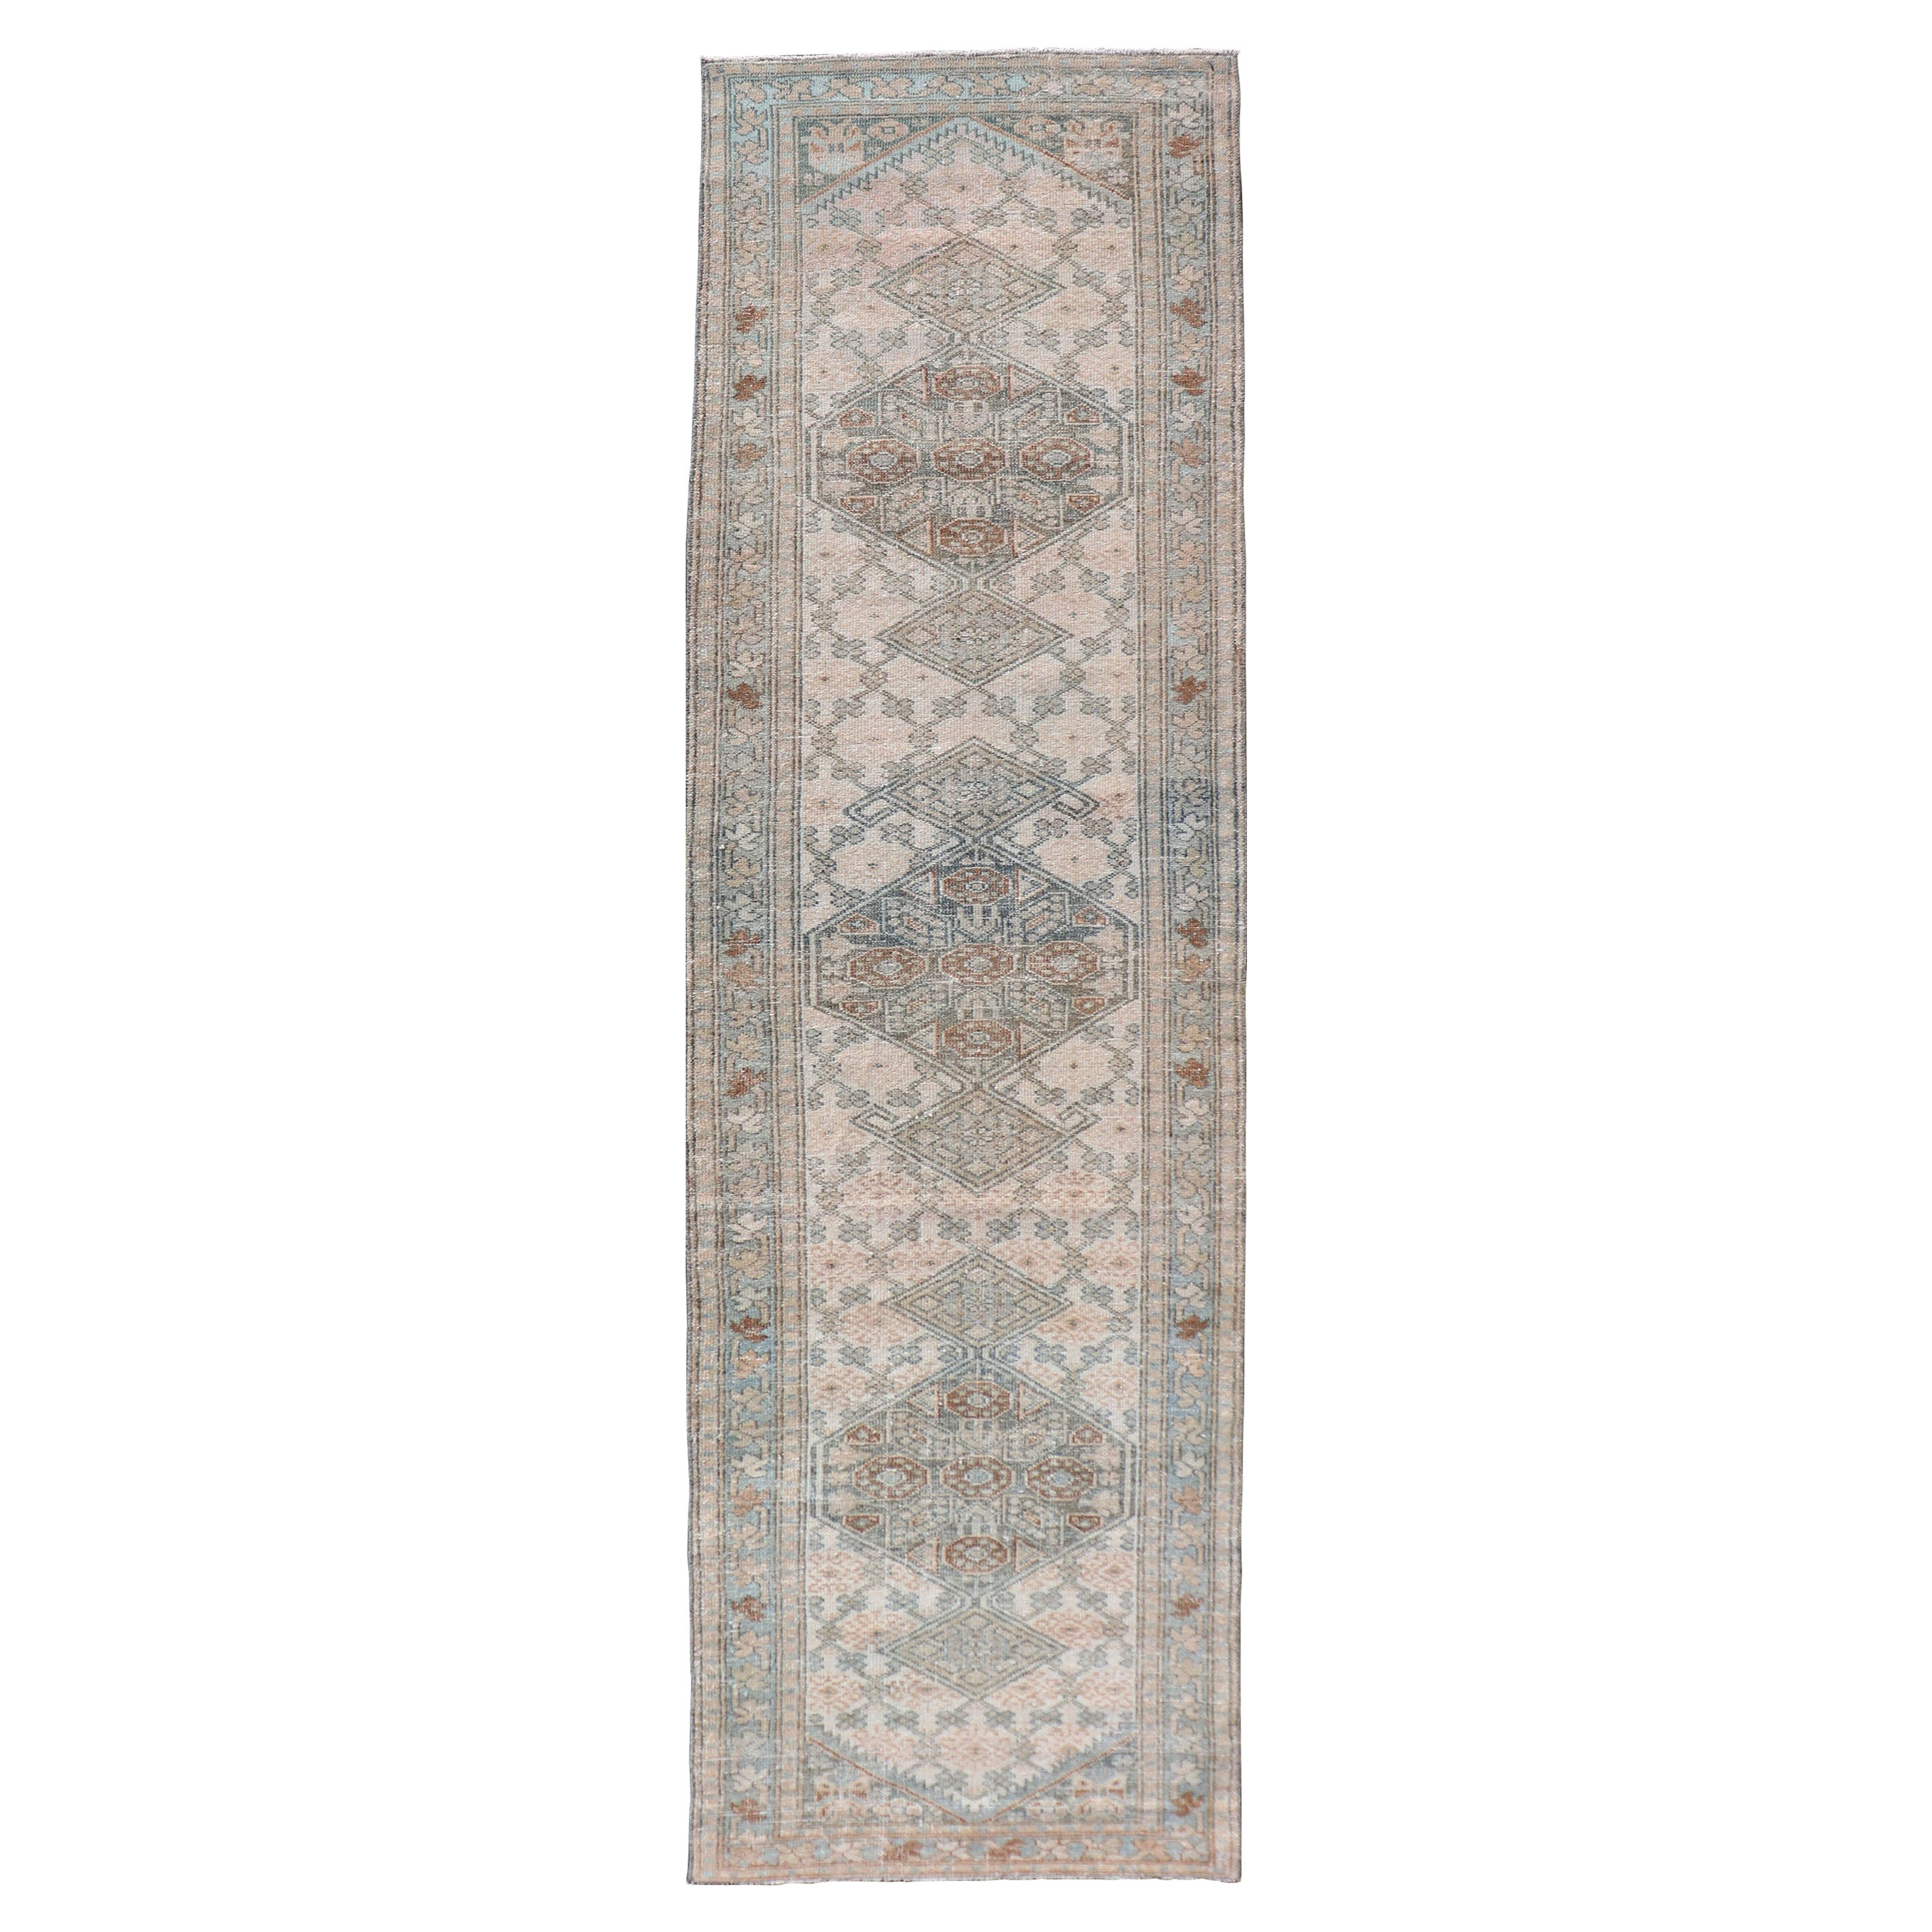 Antique Persian Sarab Runner with Sub-Geometric Design in Light Blue, Tan, Grey